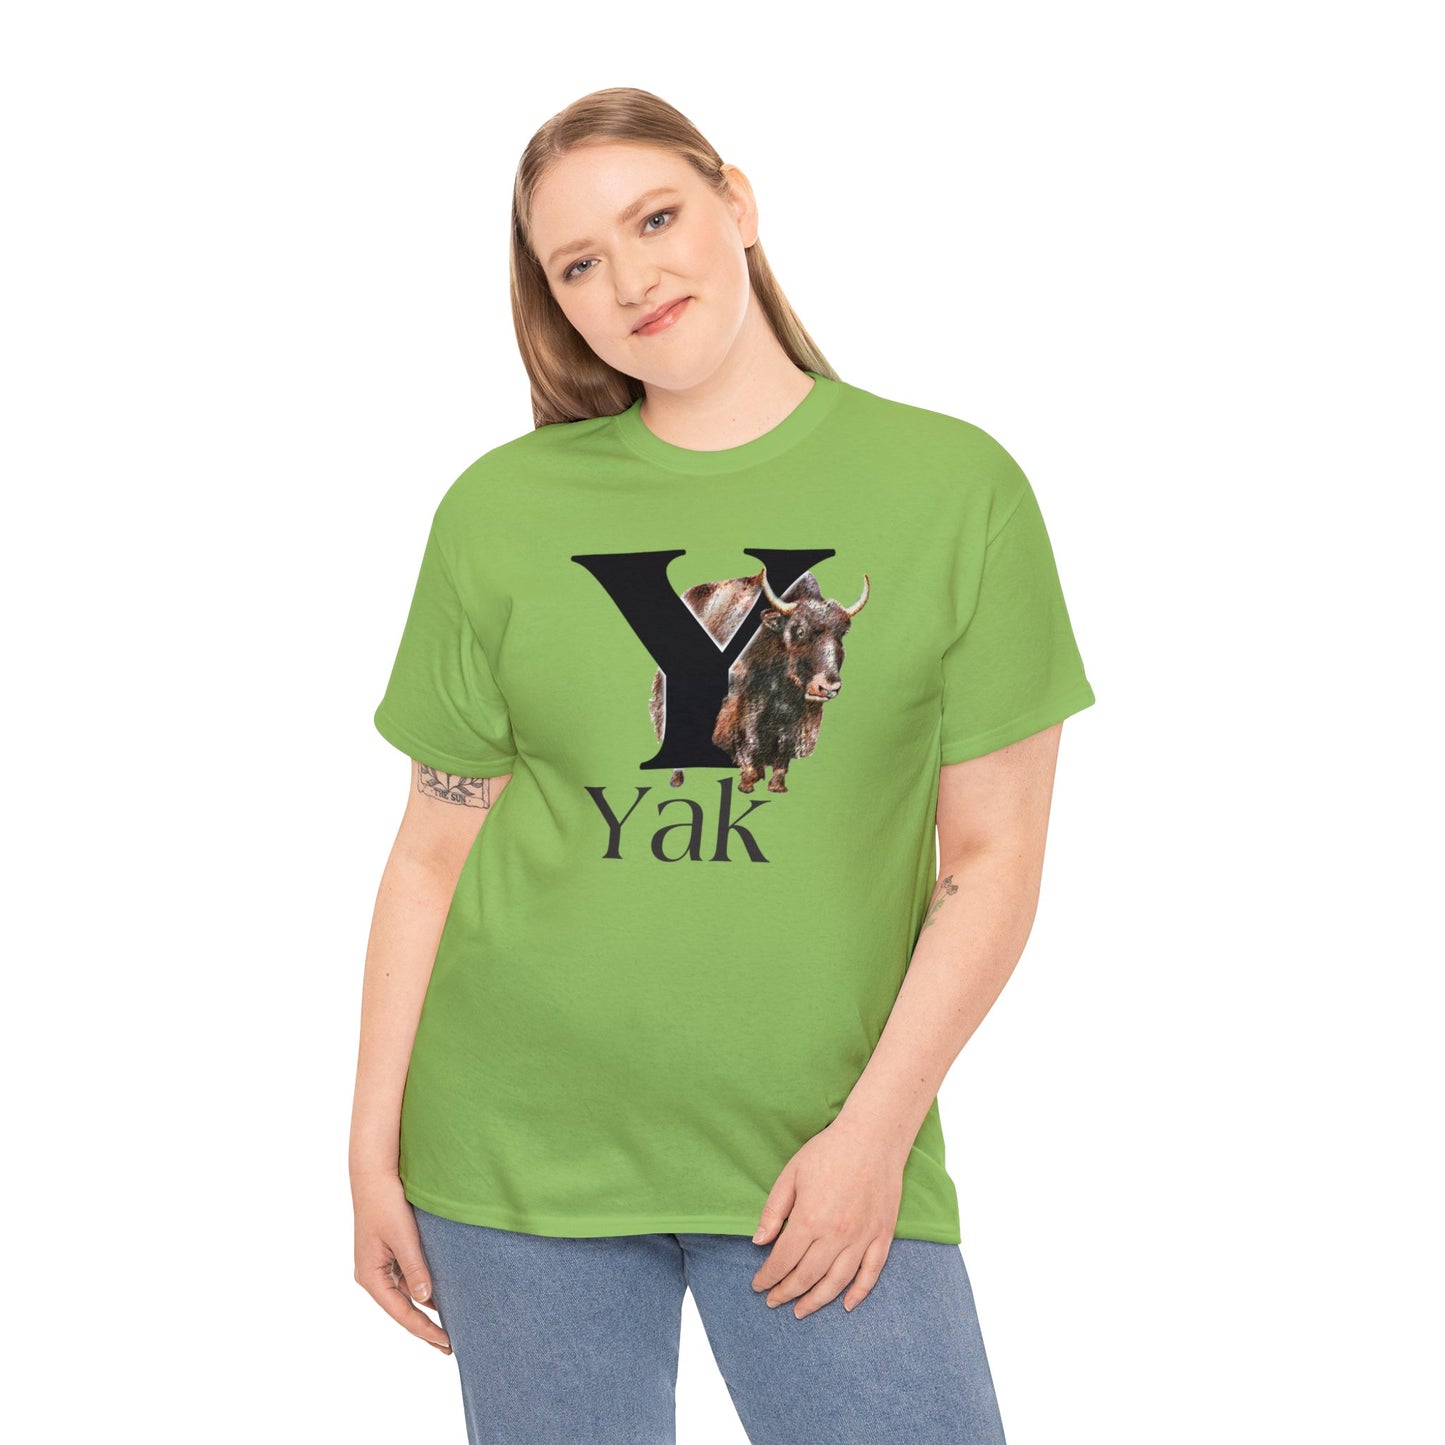 Y is for Yak T-shirt. Yak Drawing T-Shirt, Yak on shirt, Yak illustration, animal t-shirt, animal